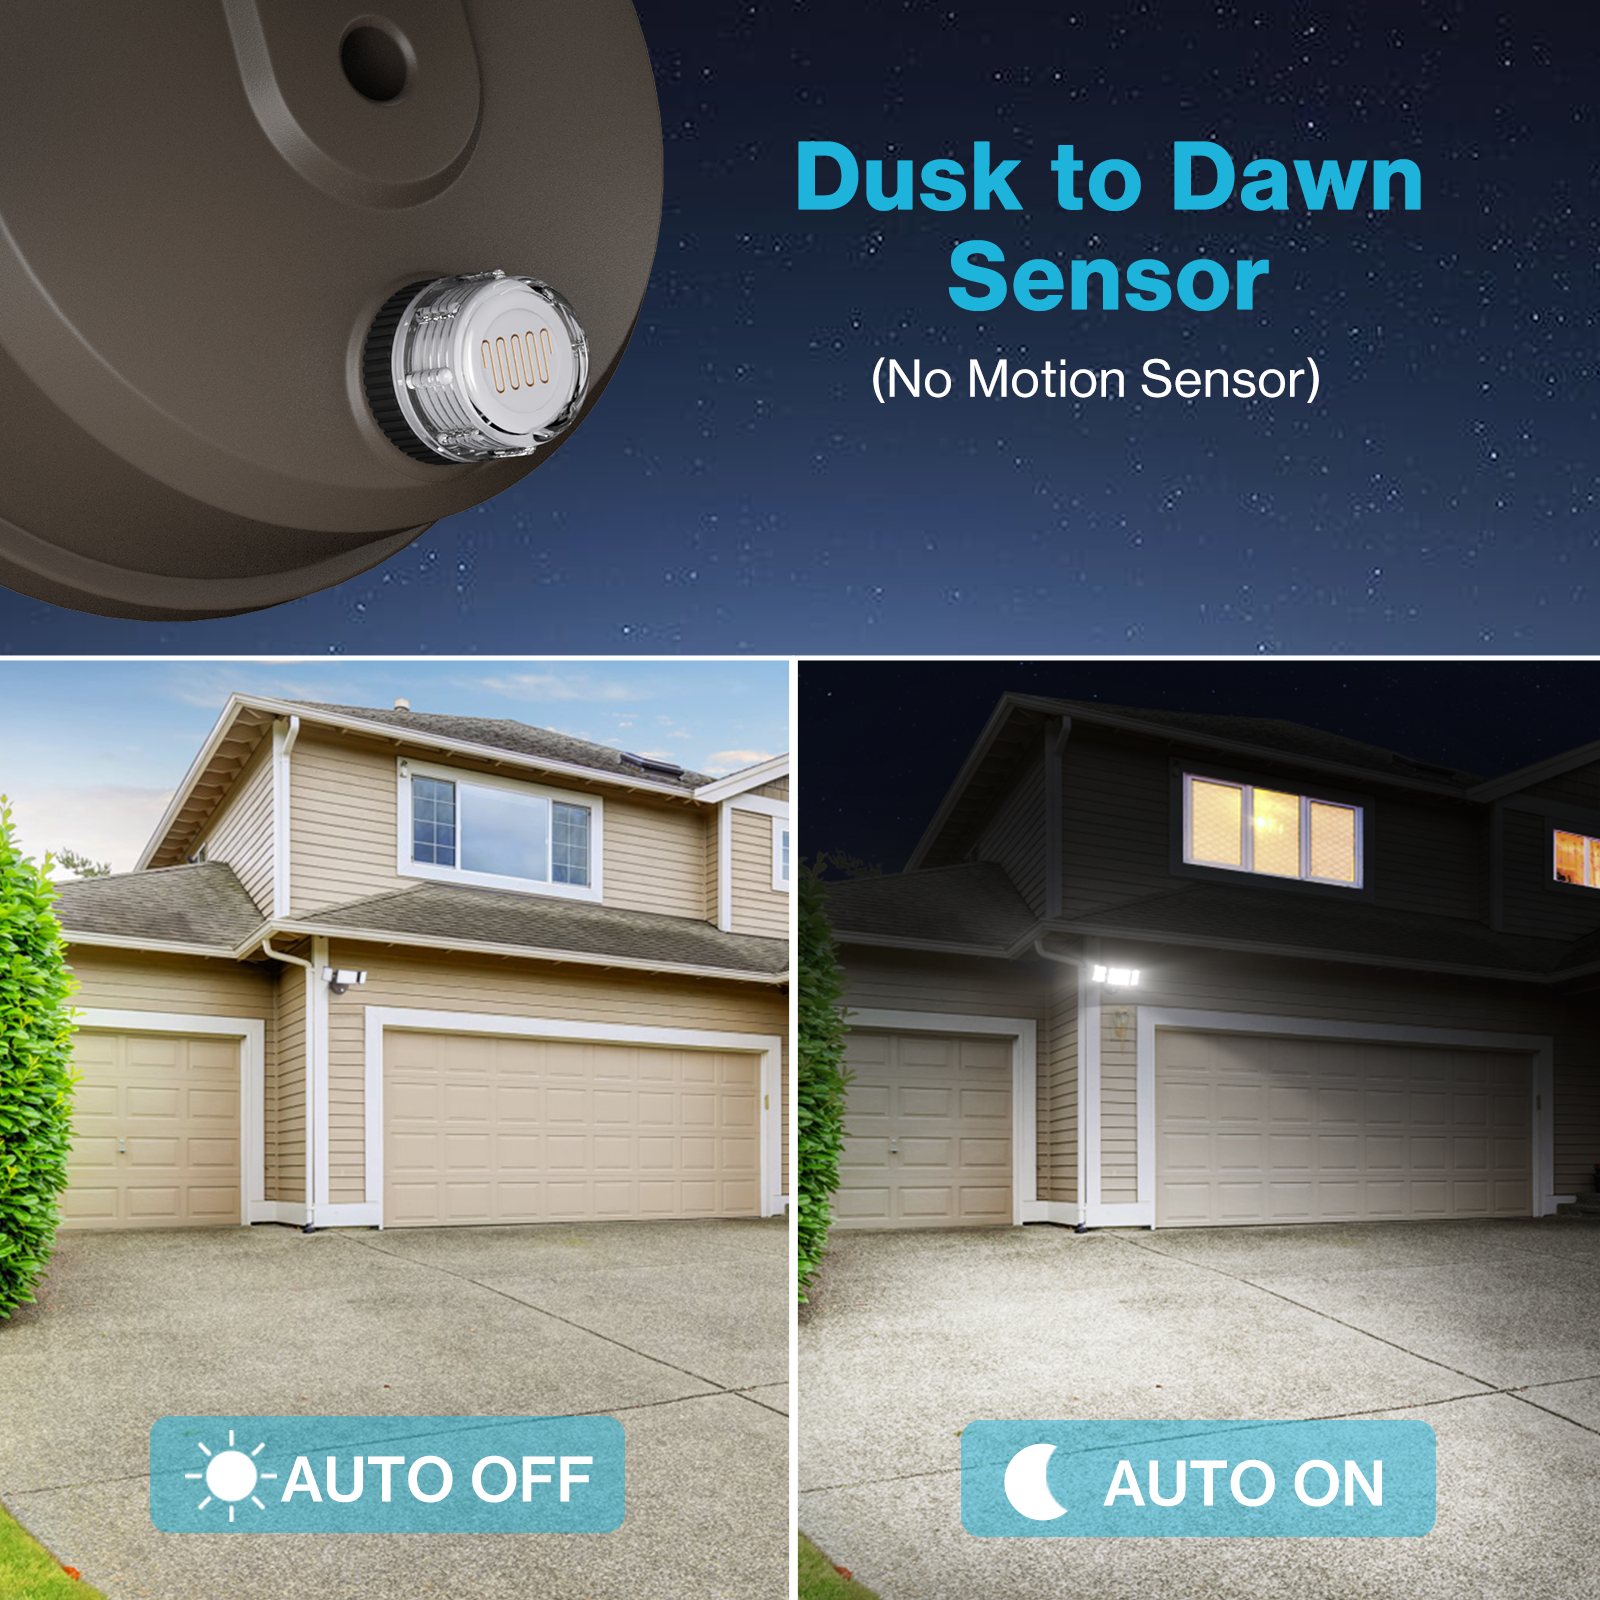 Olafus Outdoor 55W LED Light Dusk to Dawn Sensor